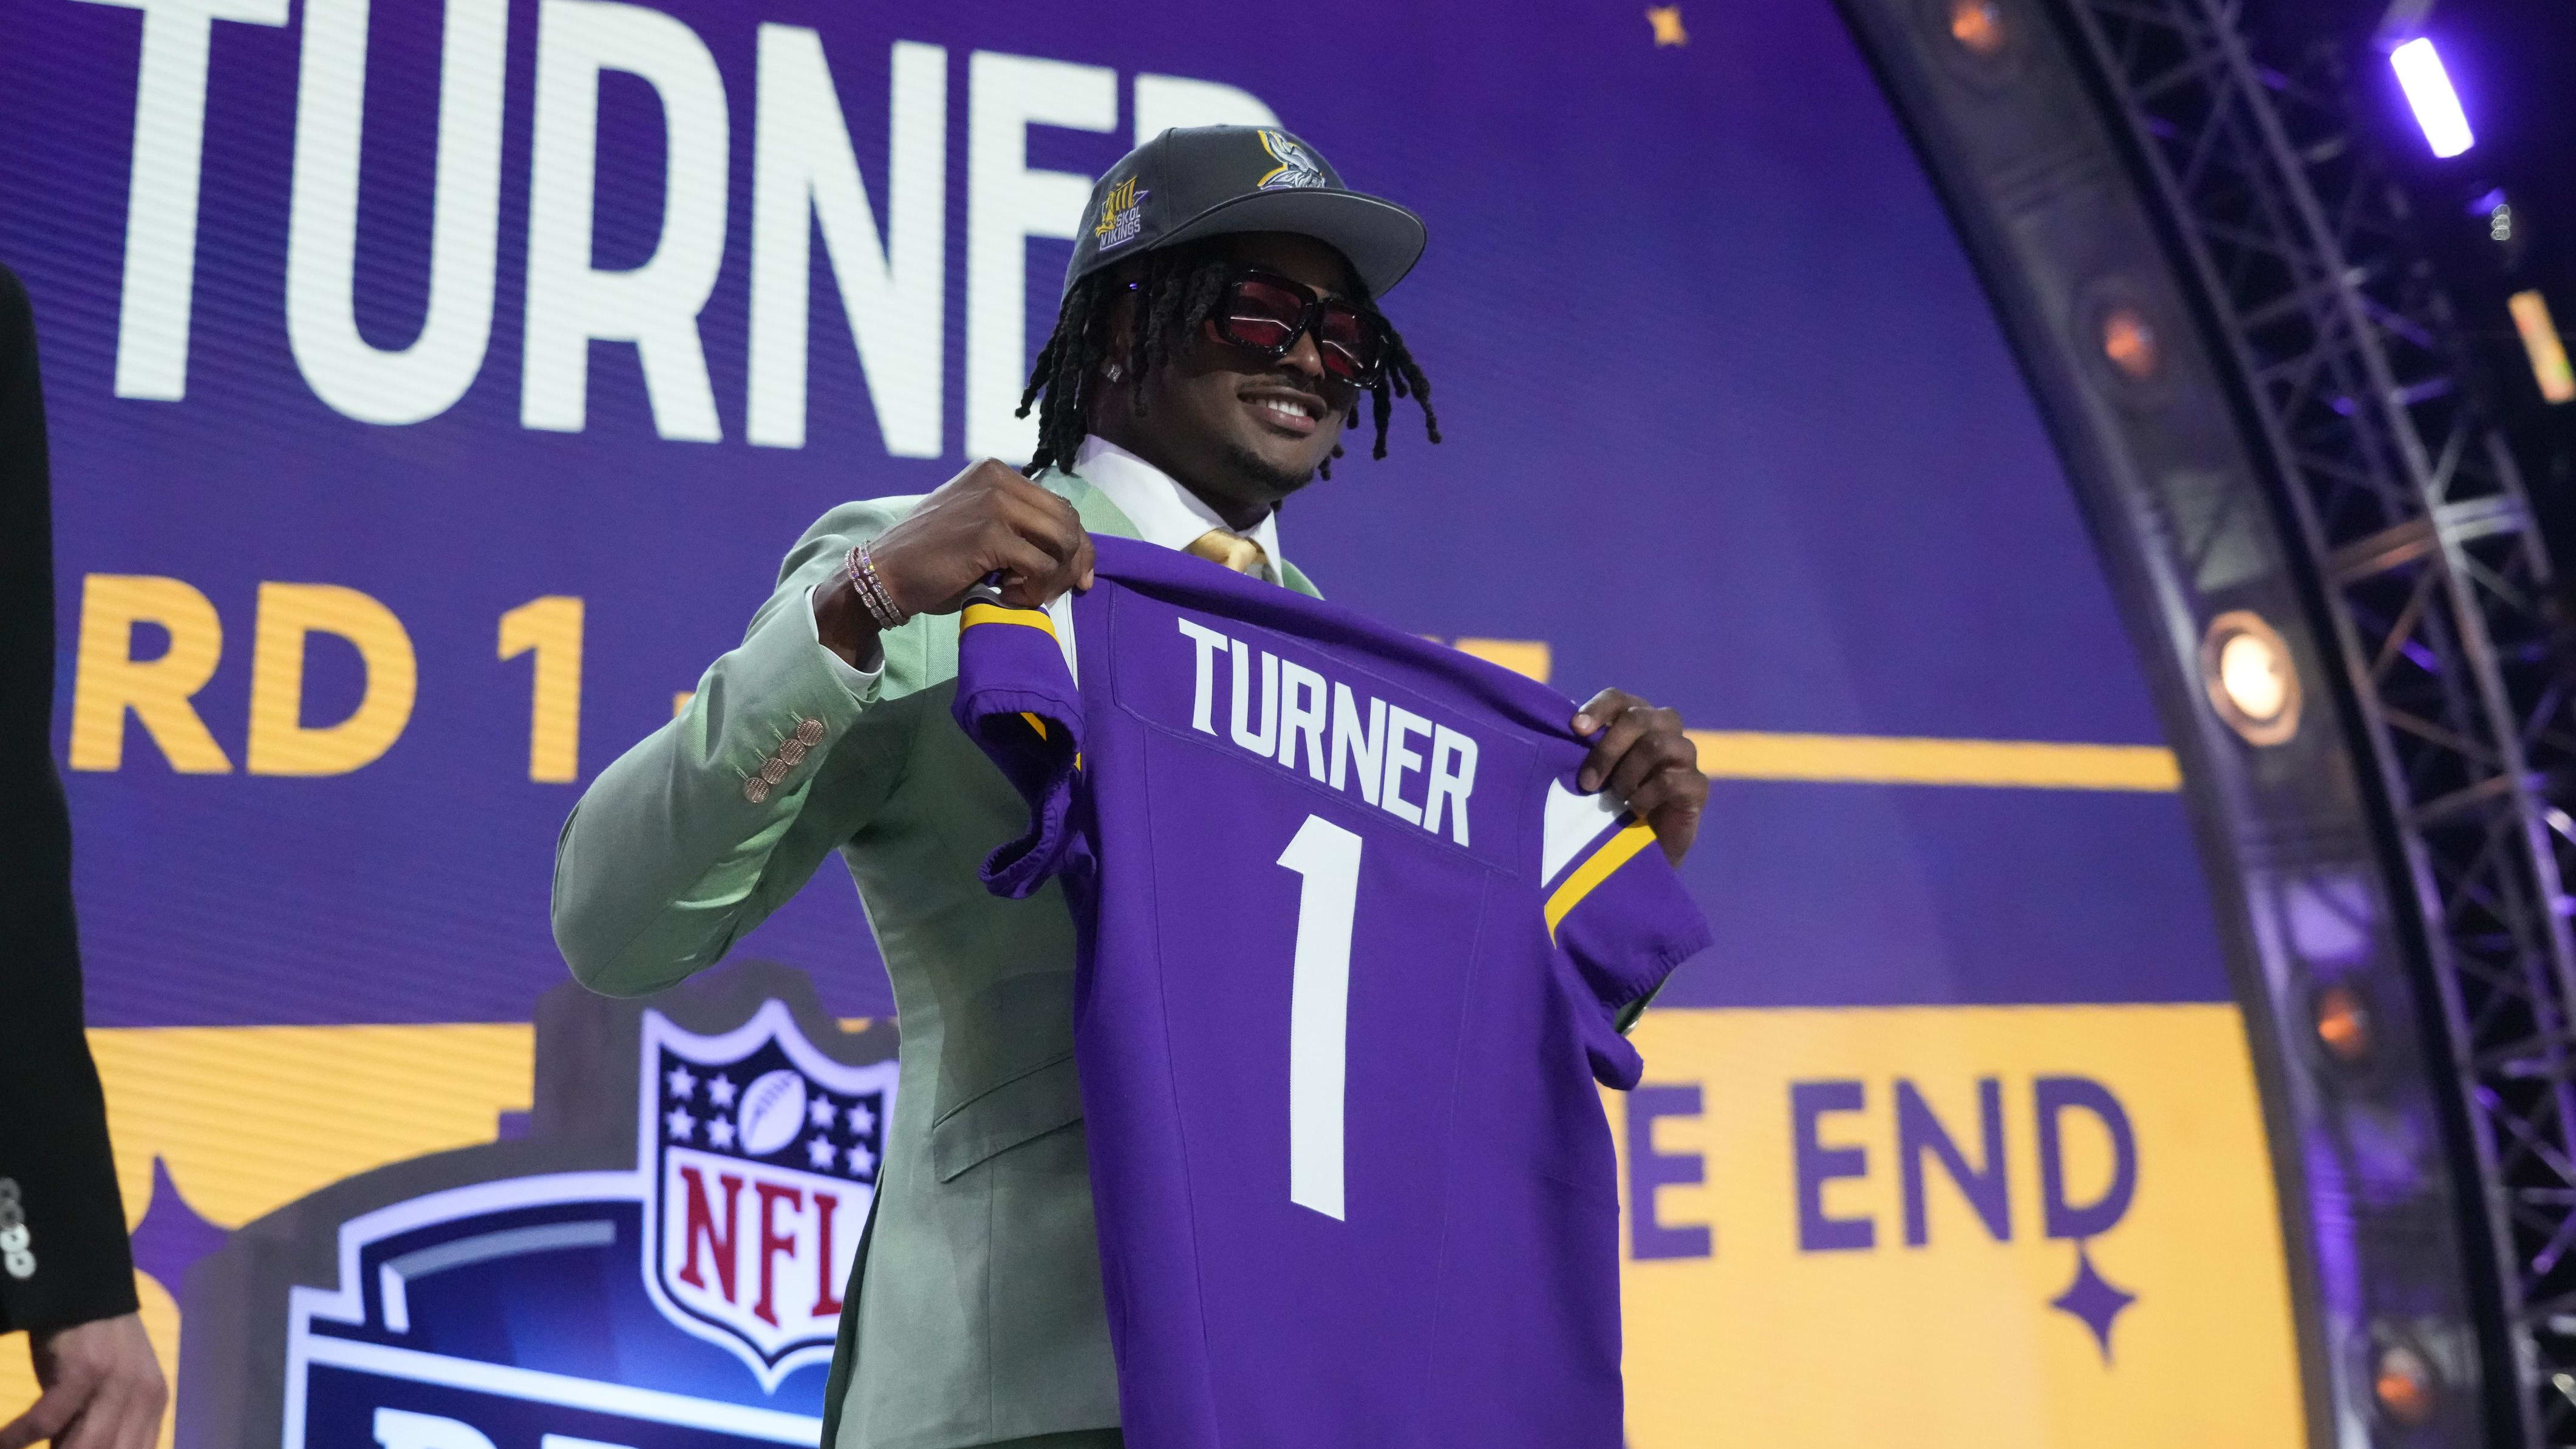 Vikings NFL Draft Picks: Experts Divided on McCarthy, Turner Selections